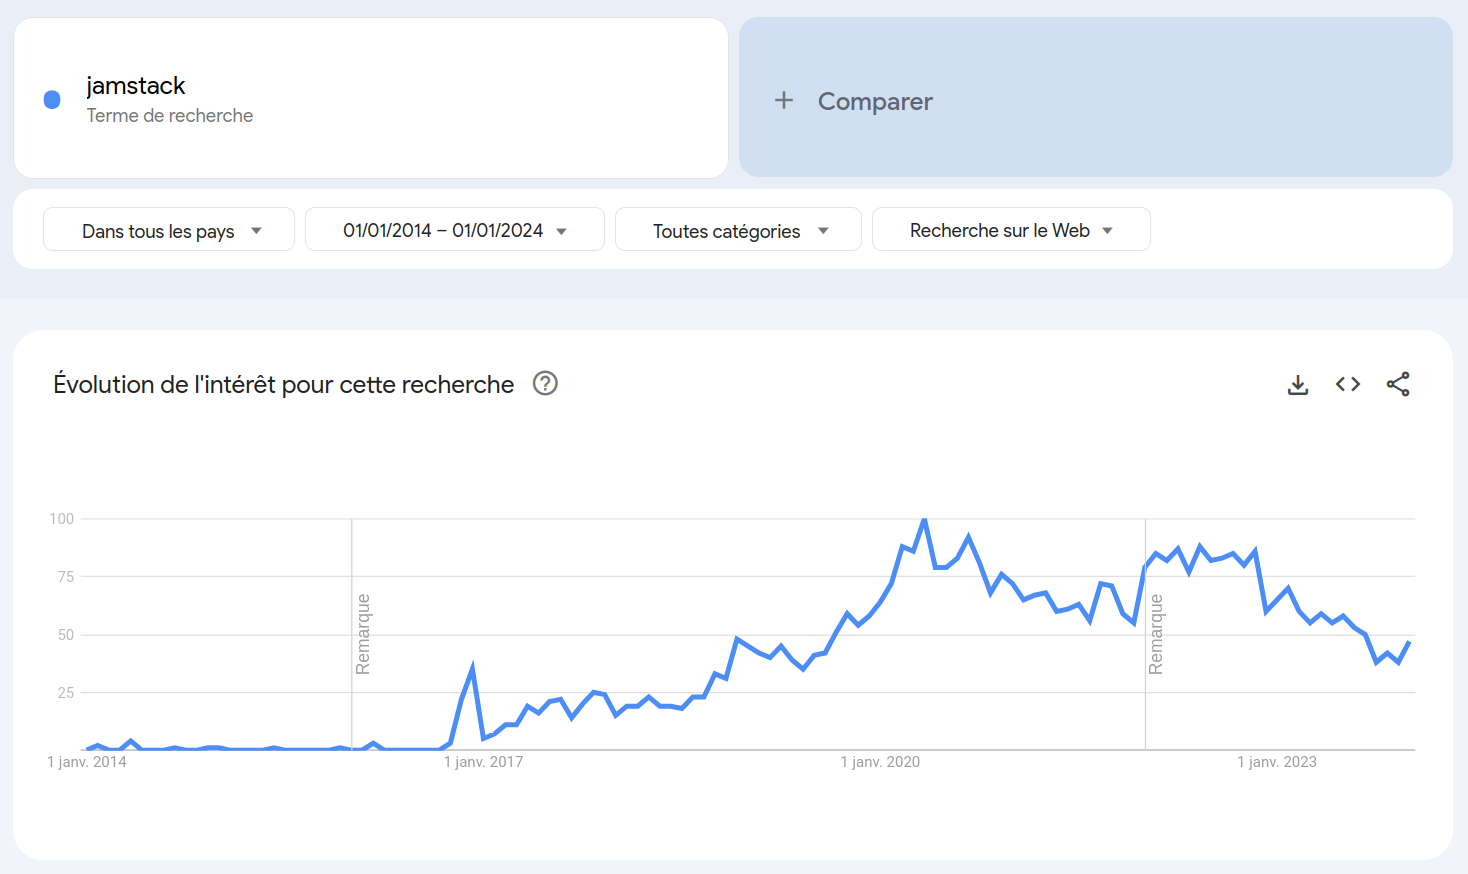 "JAMstack" on Google Trends